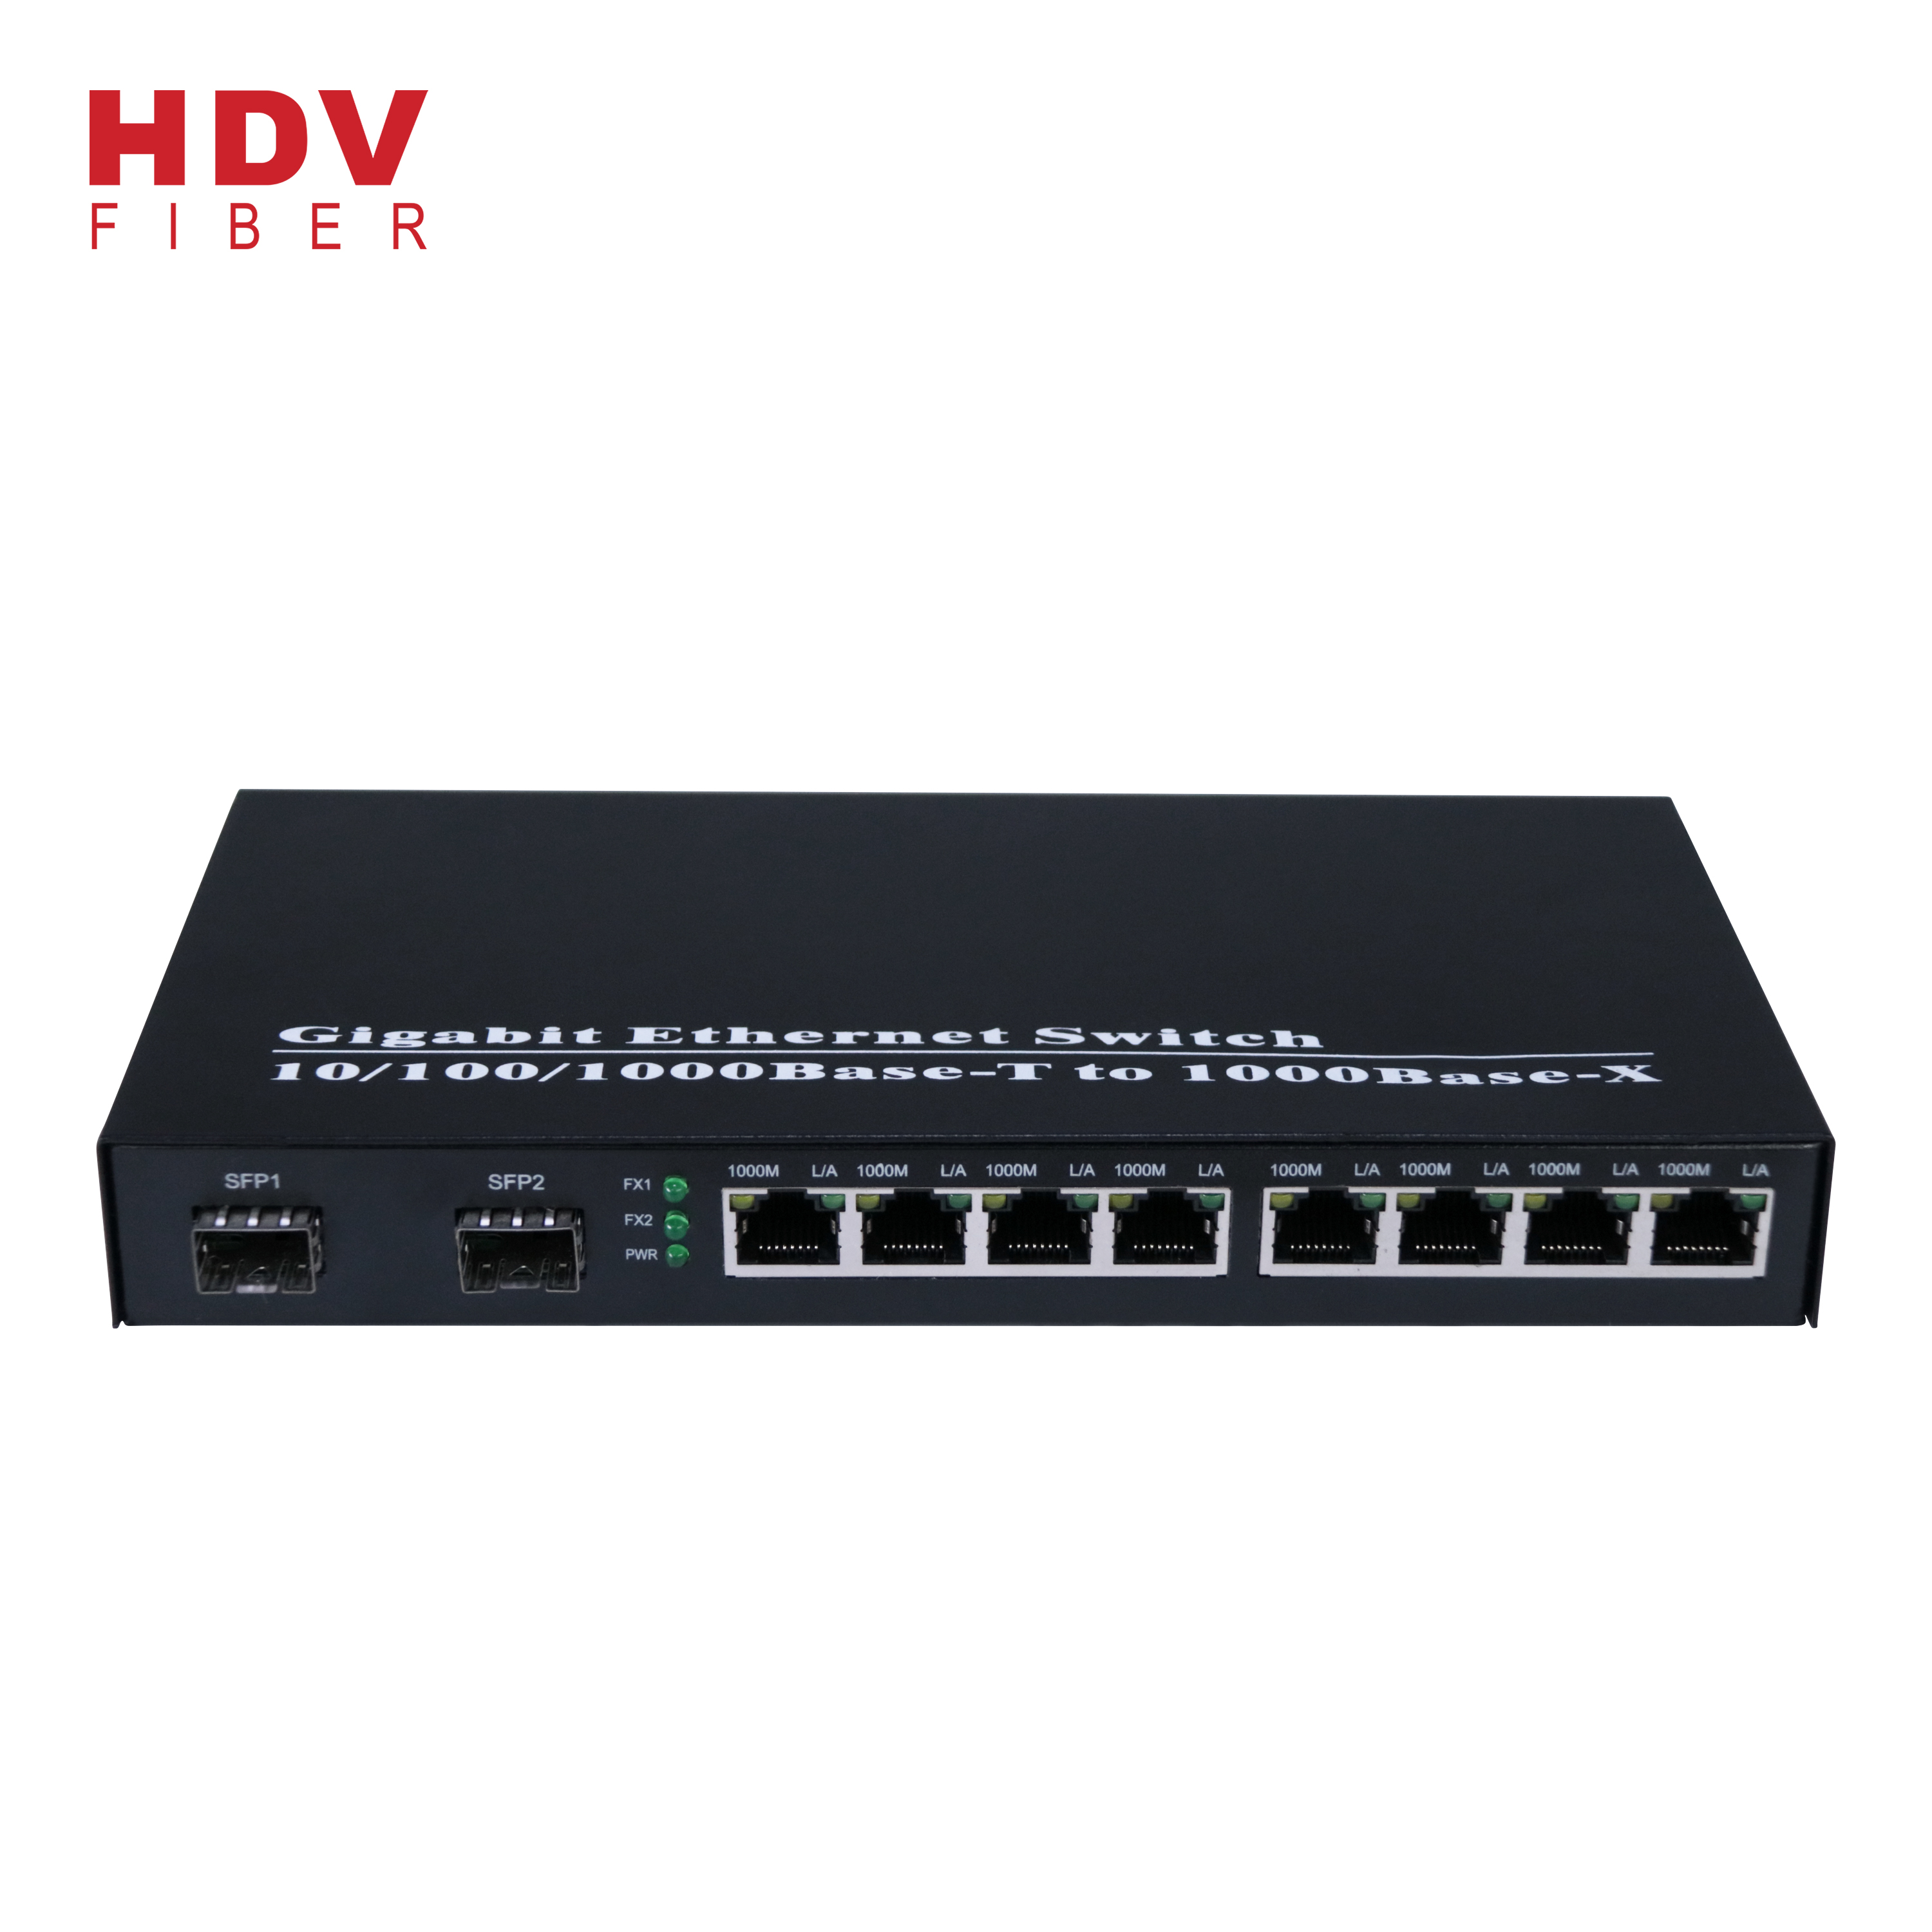 Wholesale Price China Wireless Ethernet Gateway – China Supplier 2 SFP Port 8 Ethernet Ports Optic Fiber Switch 10/100/1000M Media Converter – HDV